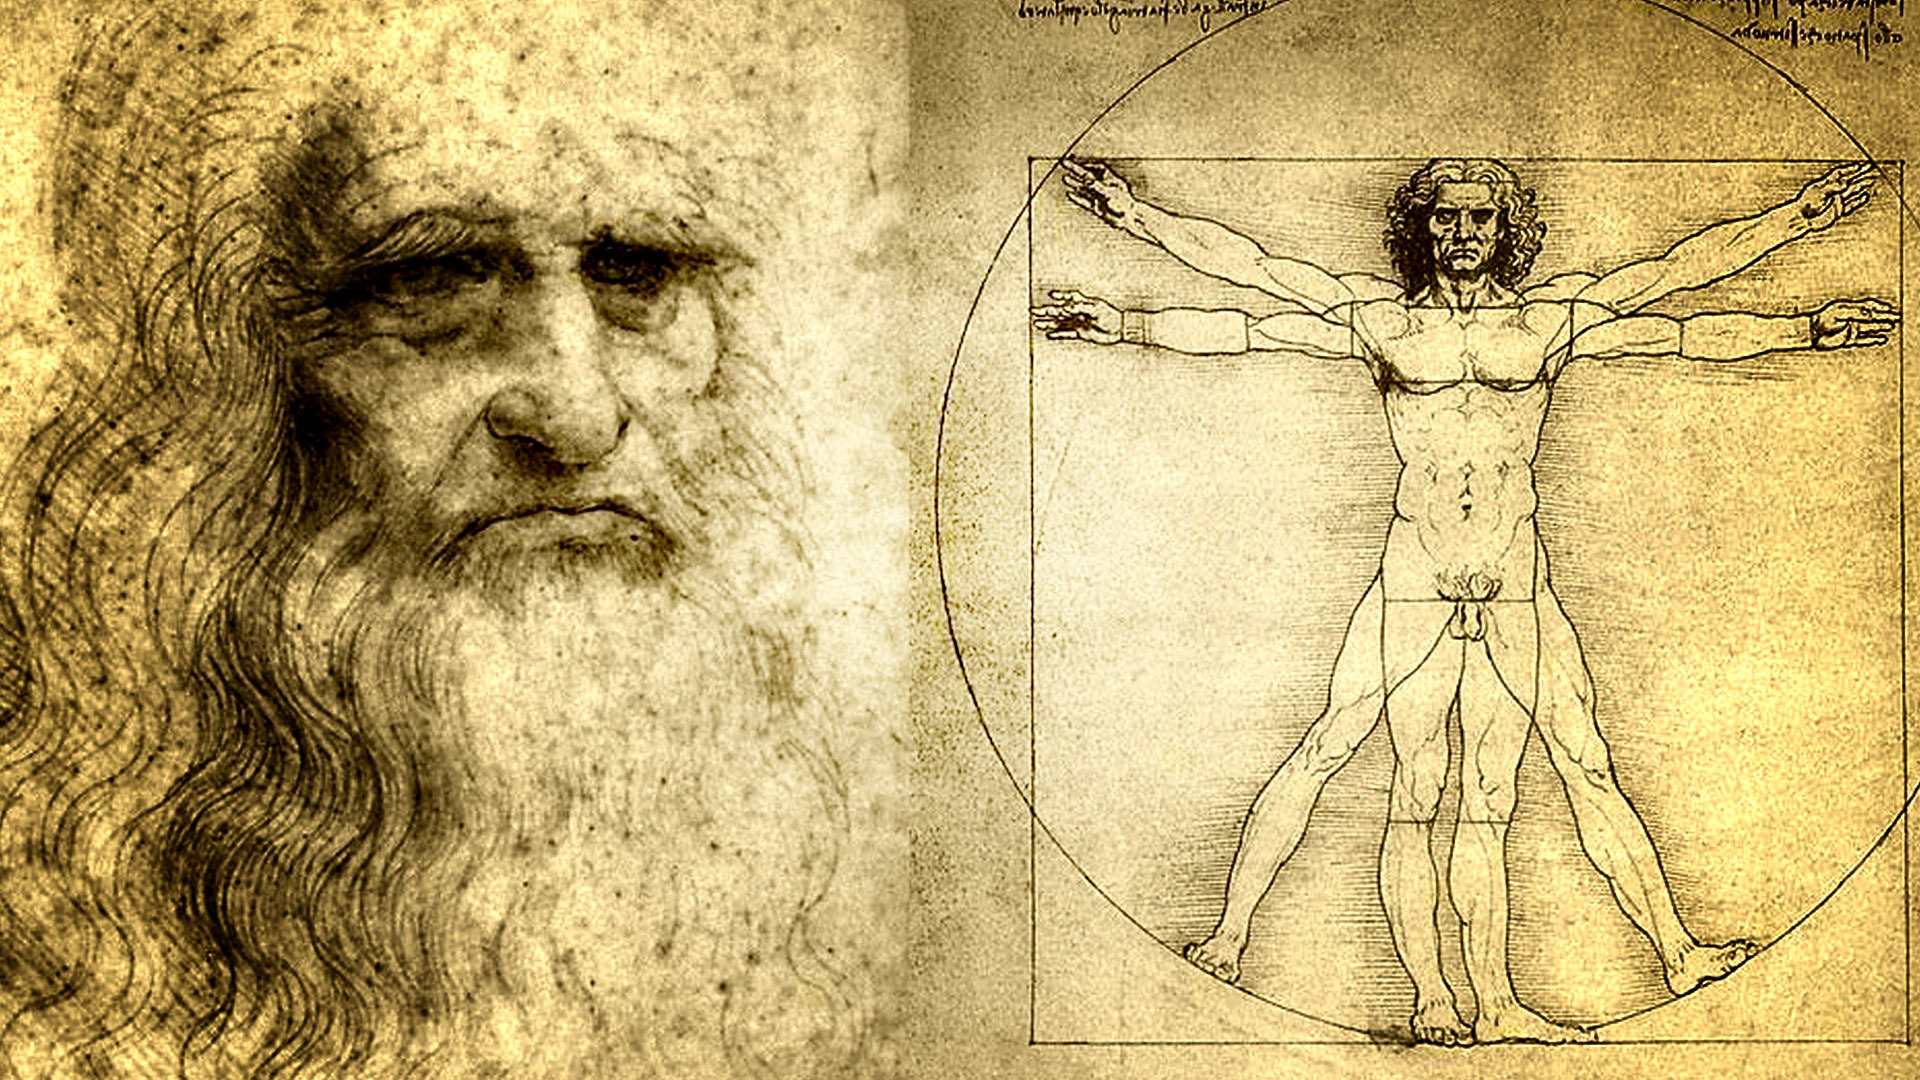 Show La vita di Leonardo da Vinci